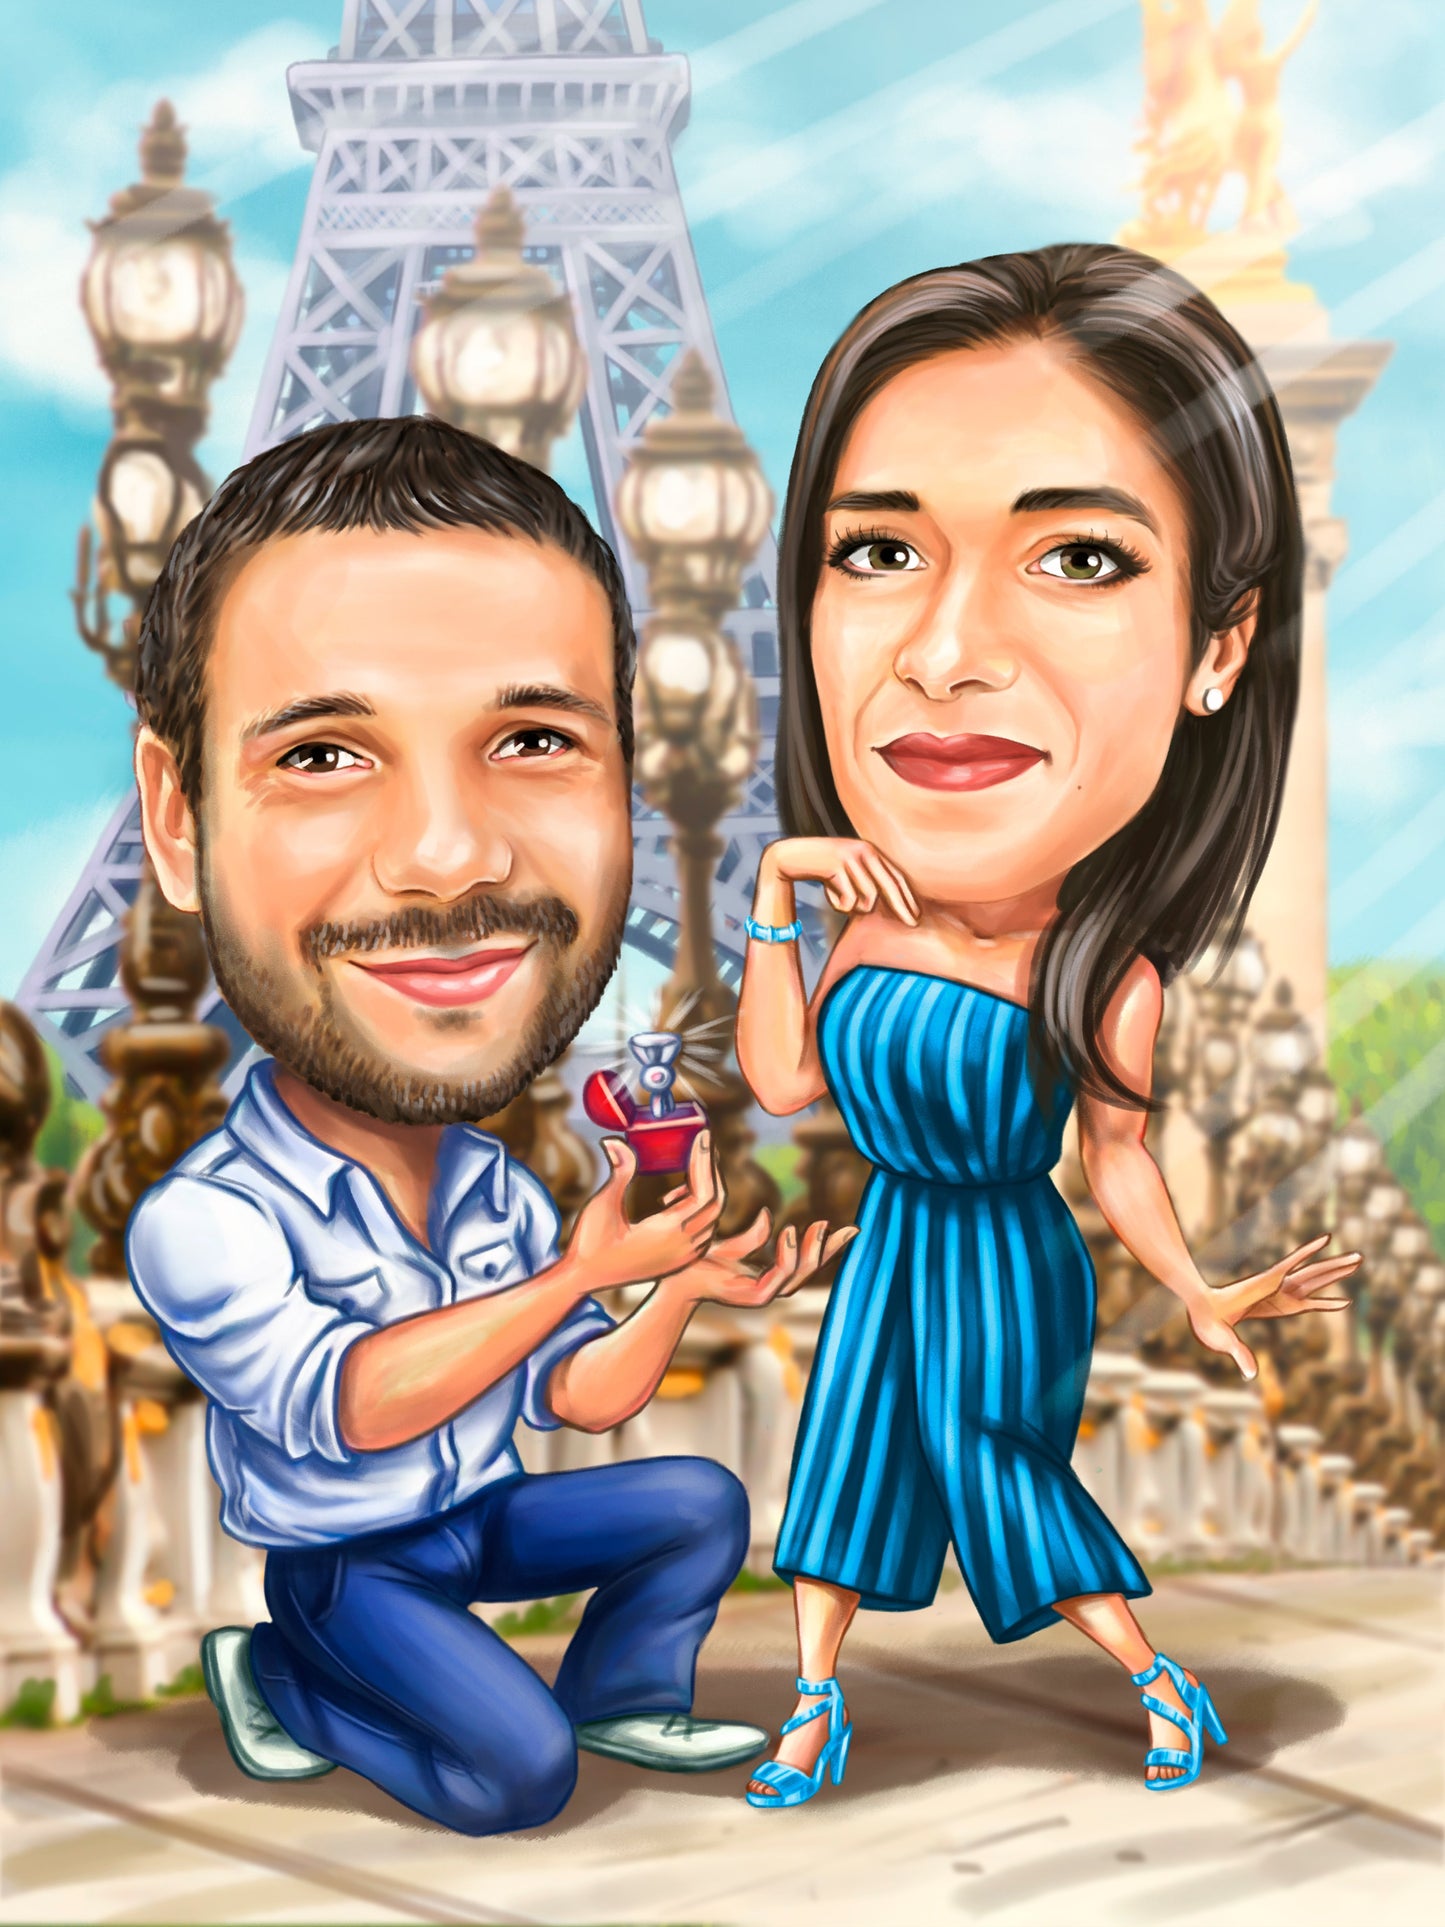 Marriage proposal in Paris caricature